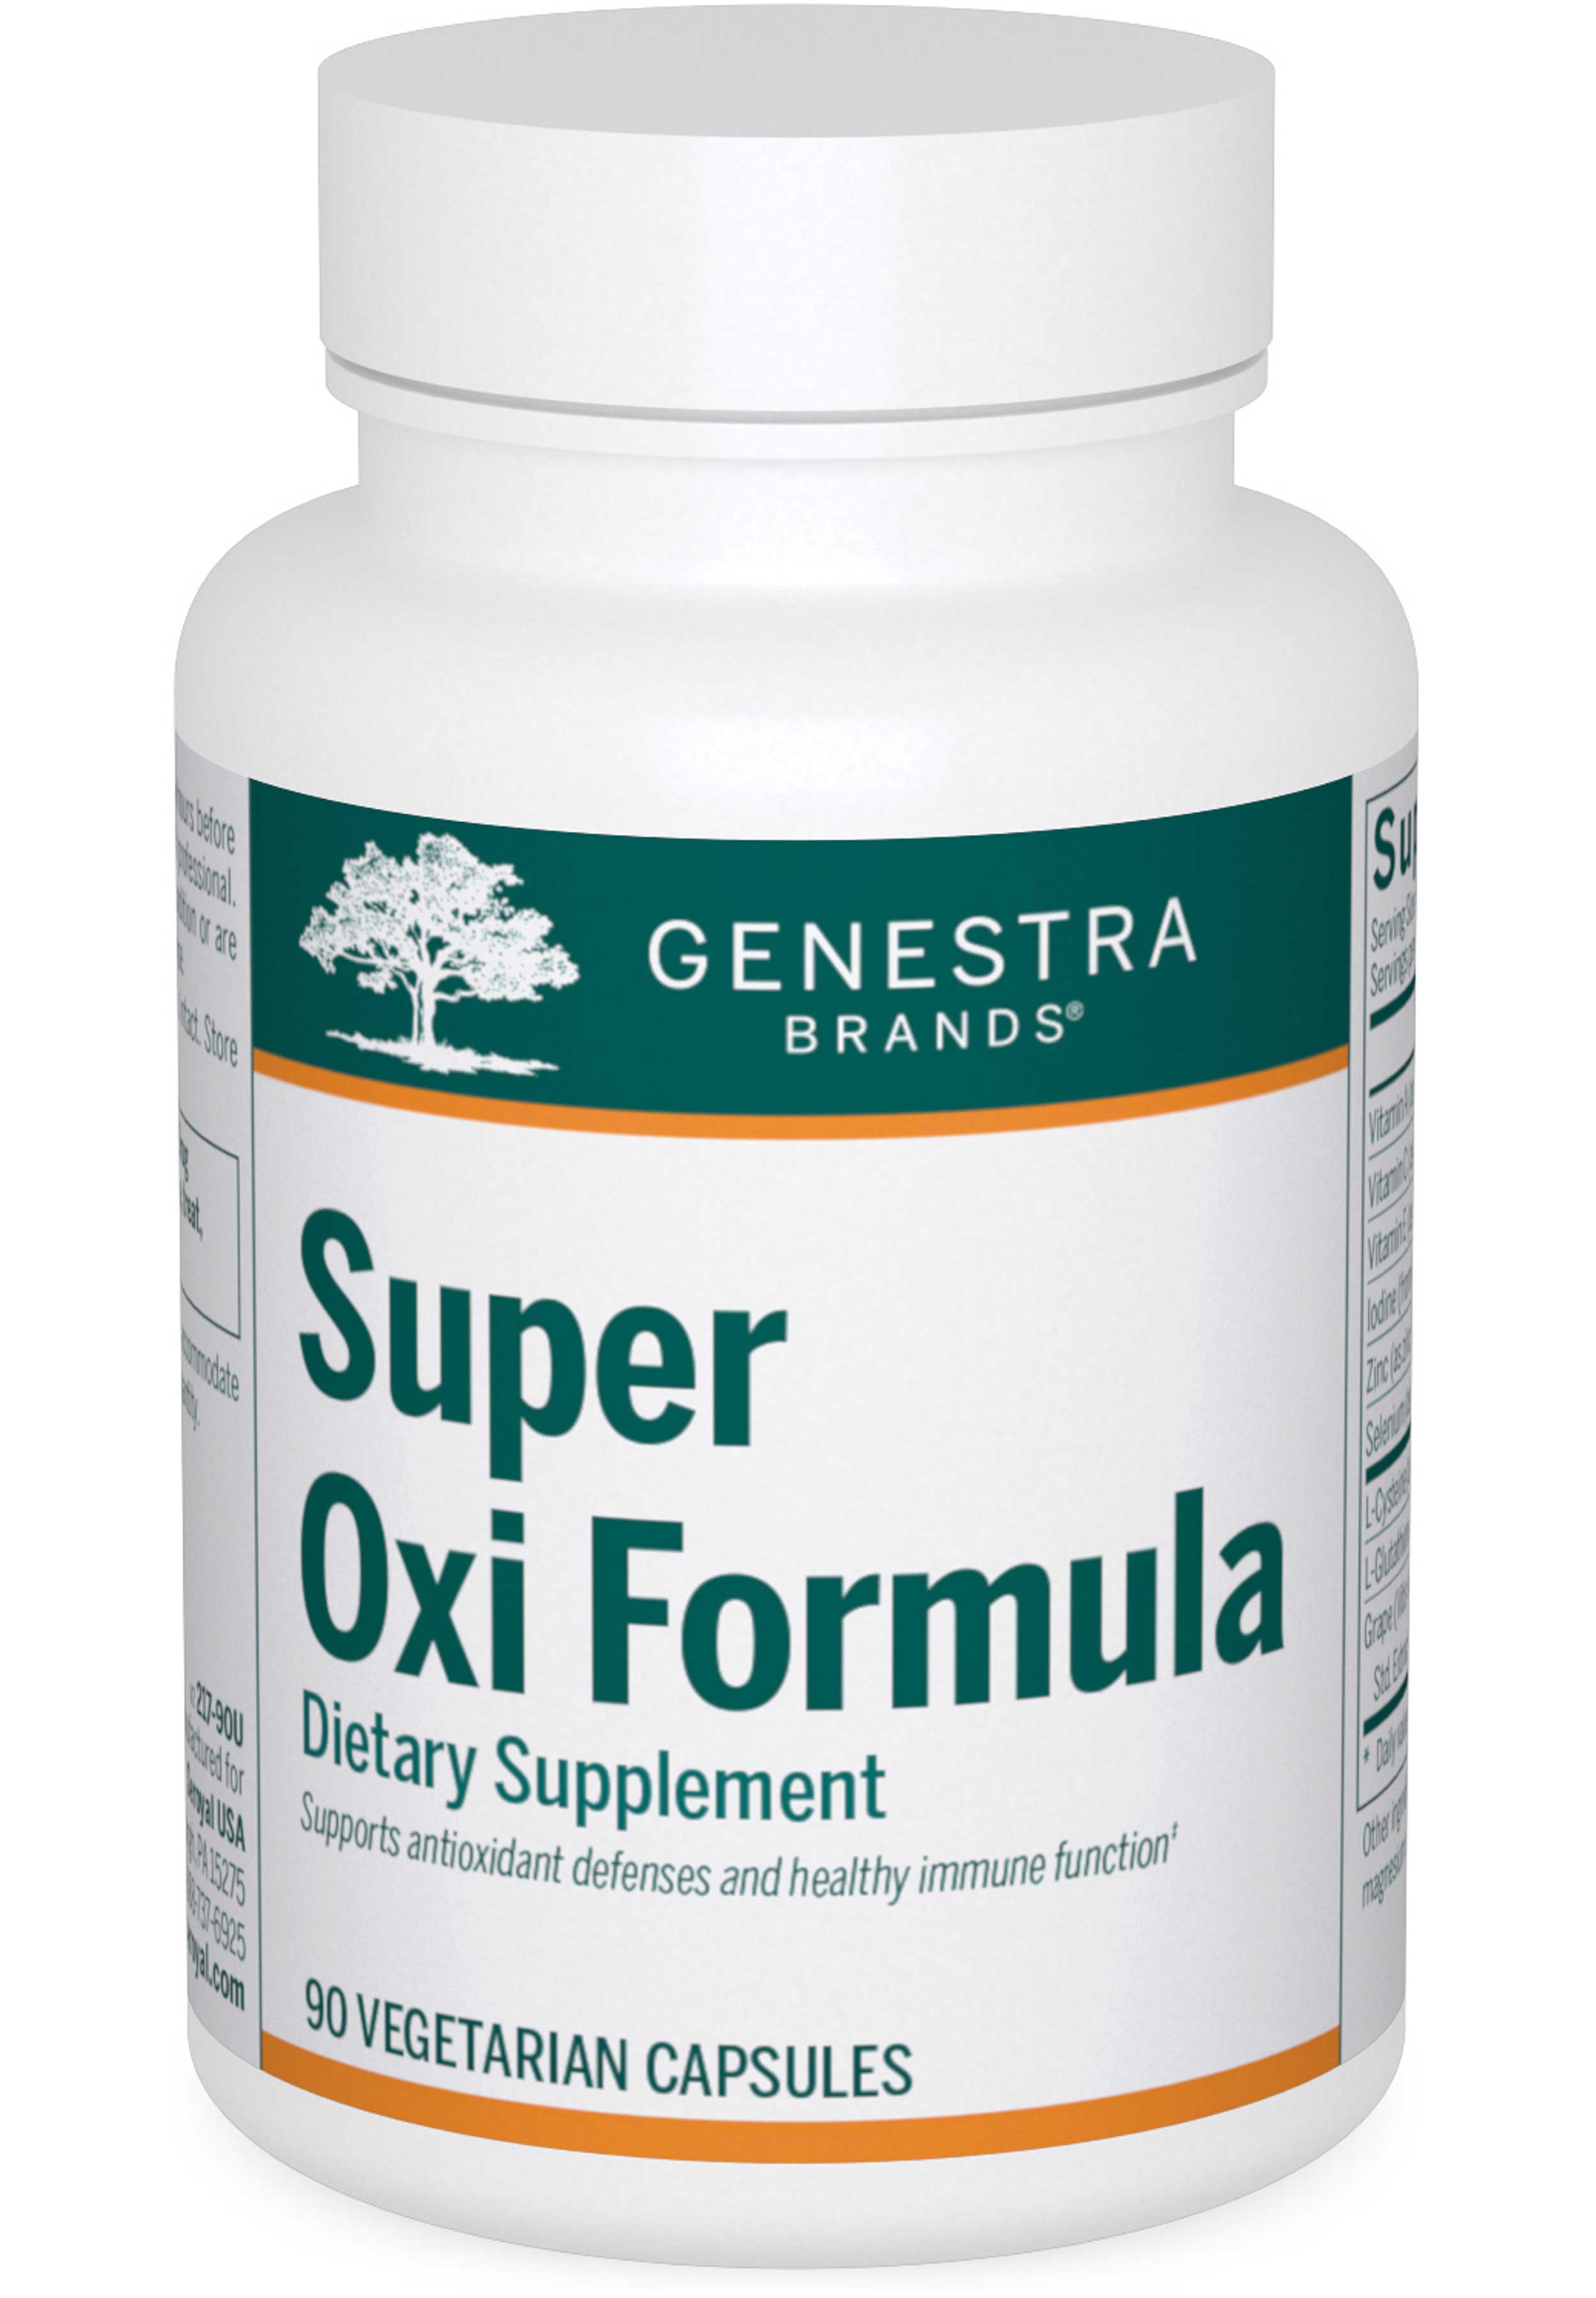 Genestra Brands Super Oxi Formula